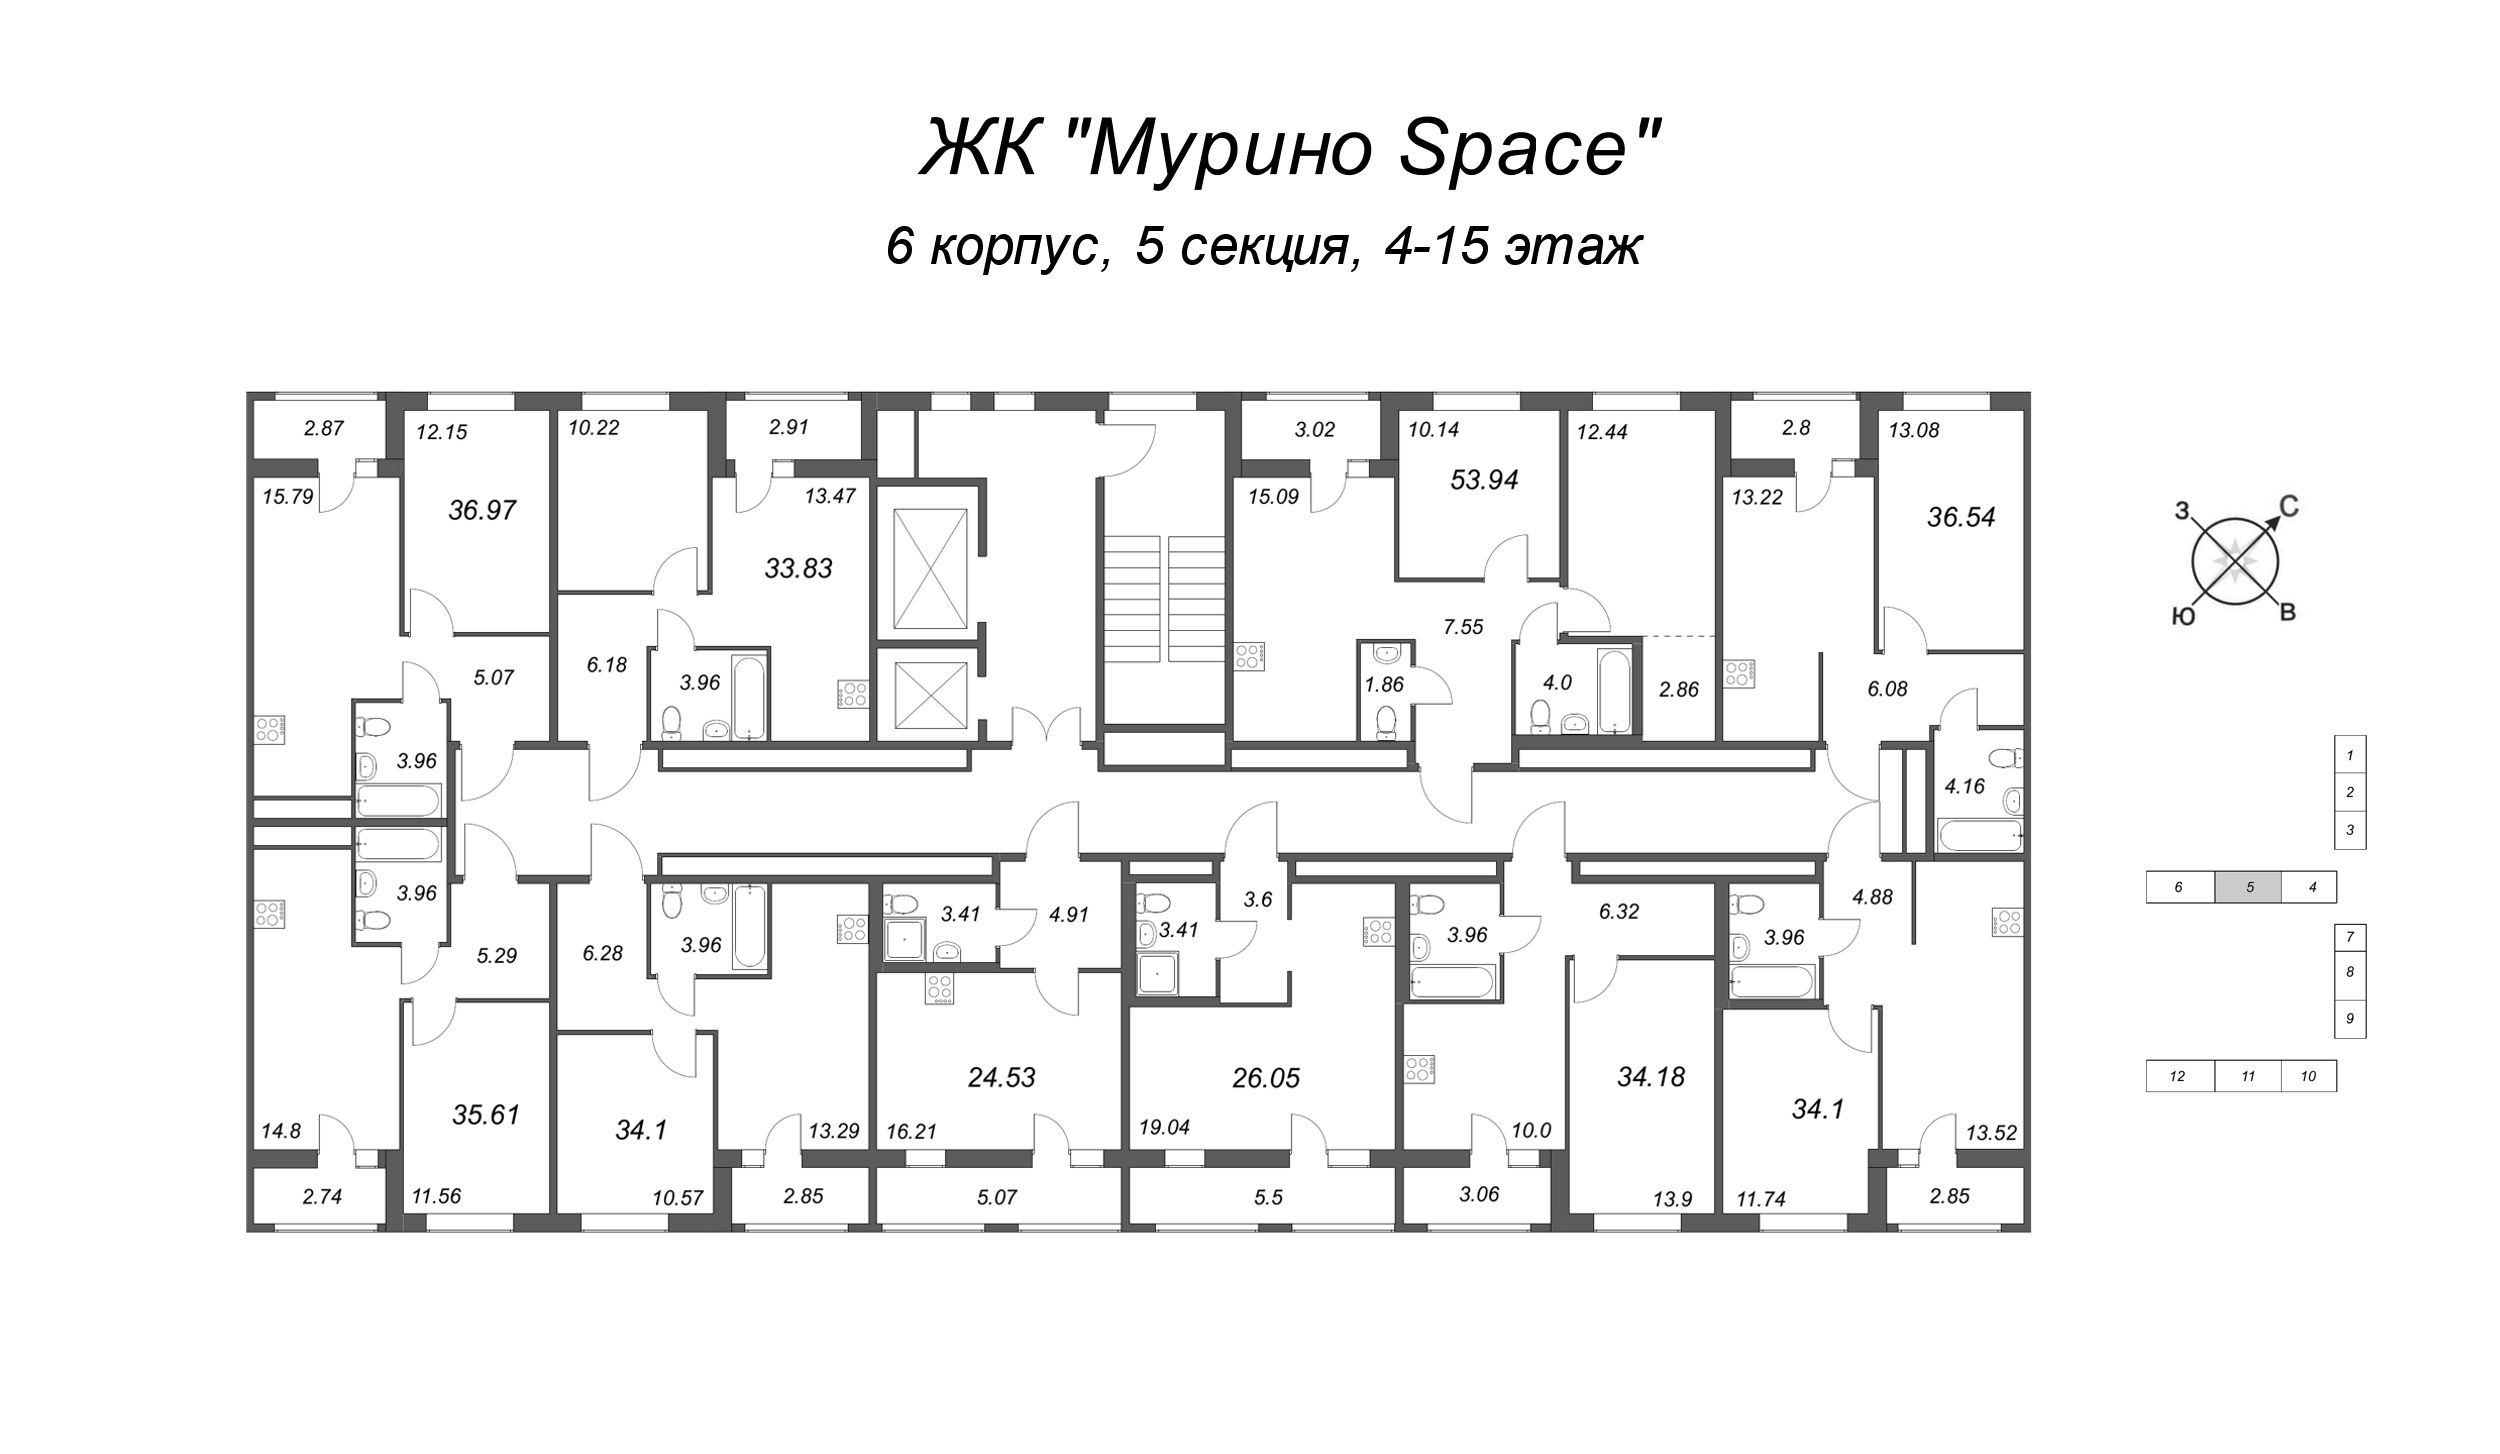 2-комнатная (Евро) квартира, 30.89 м² - планировка этажа